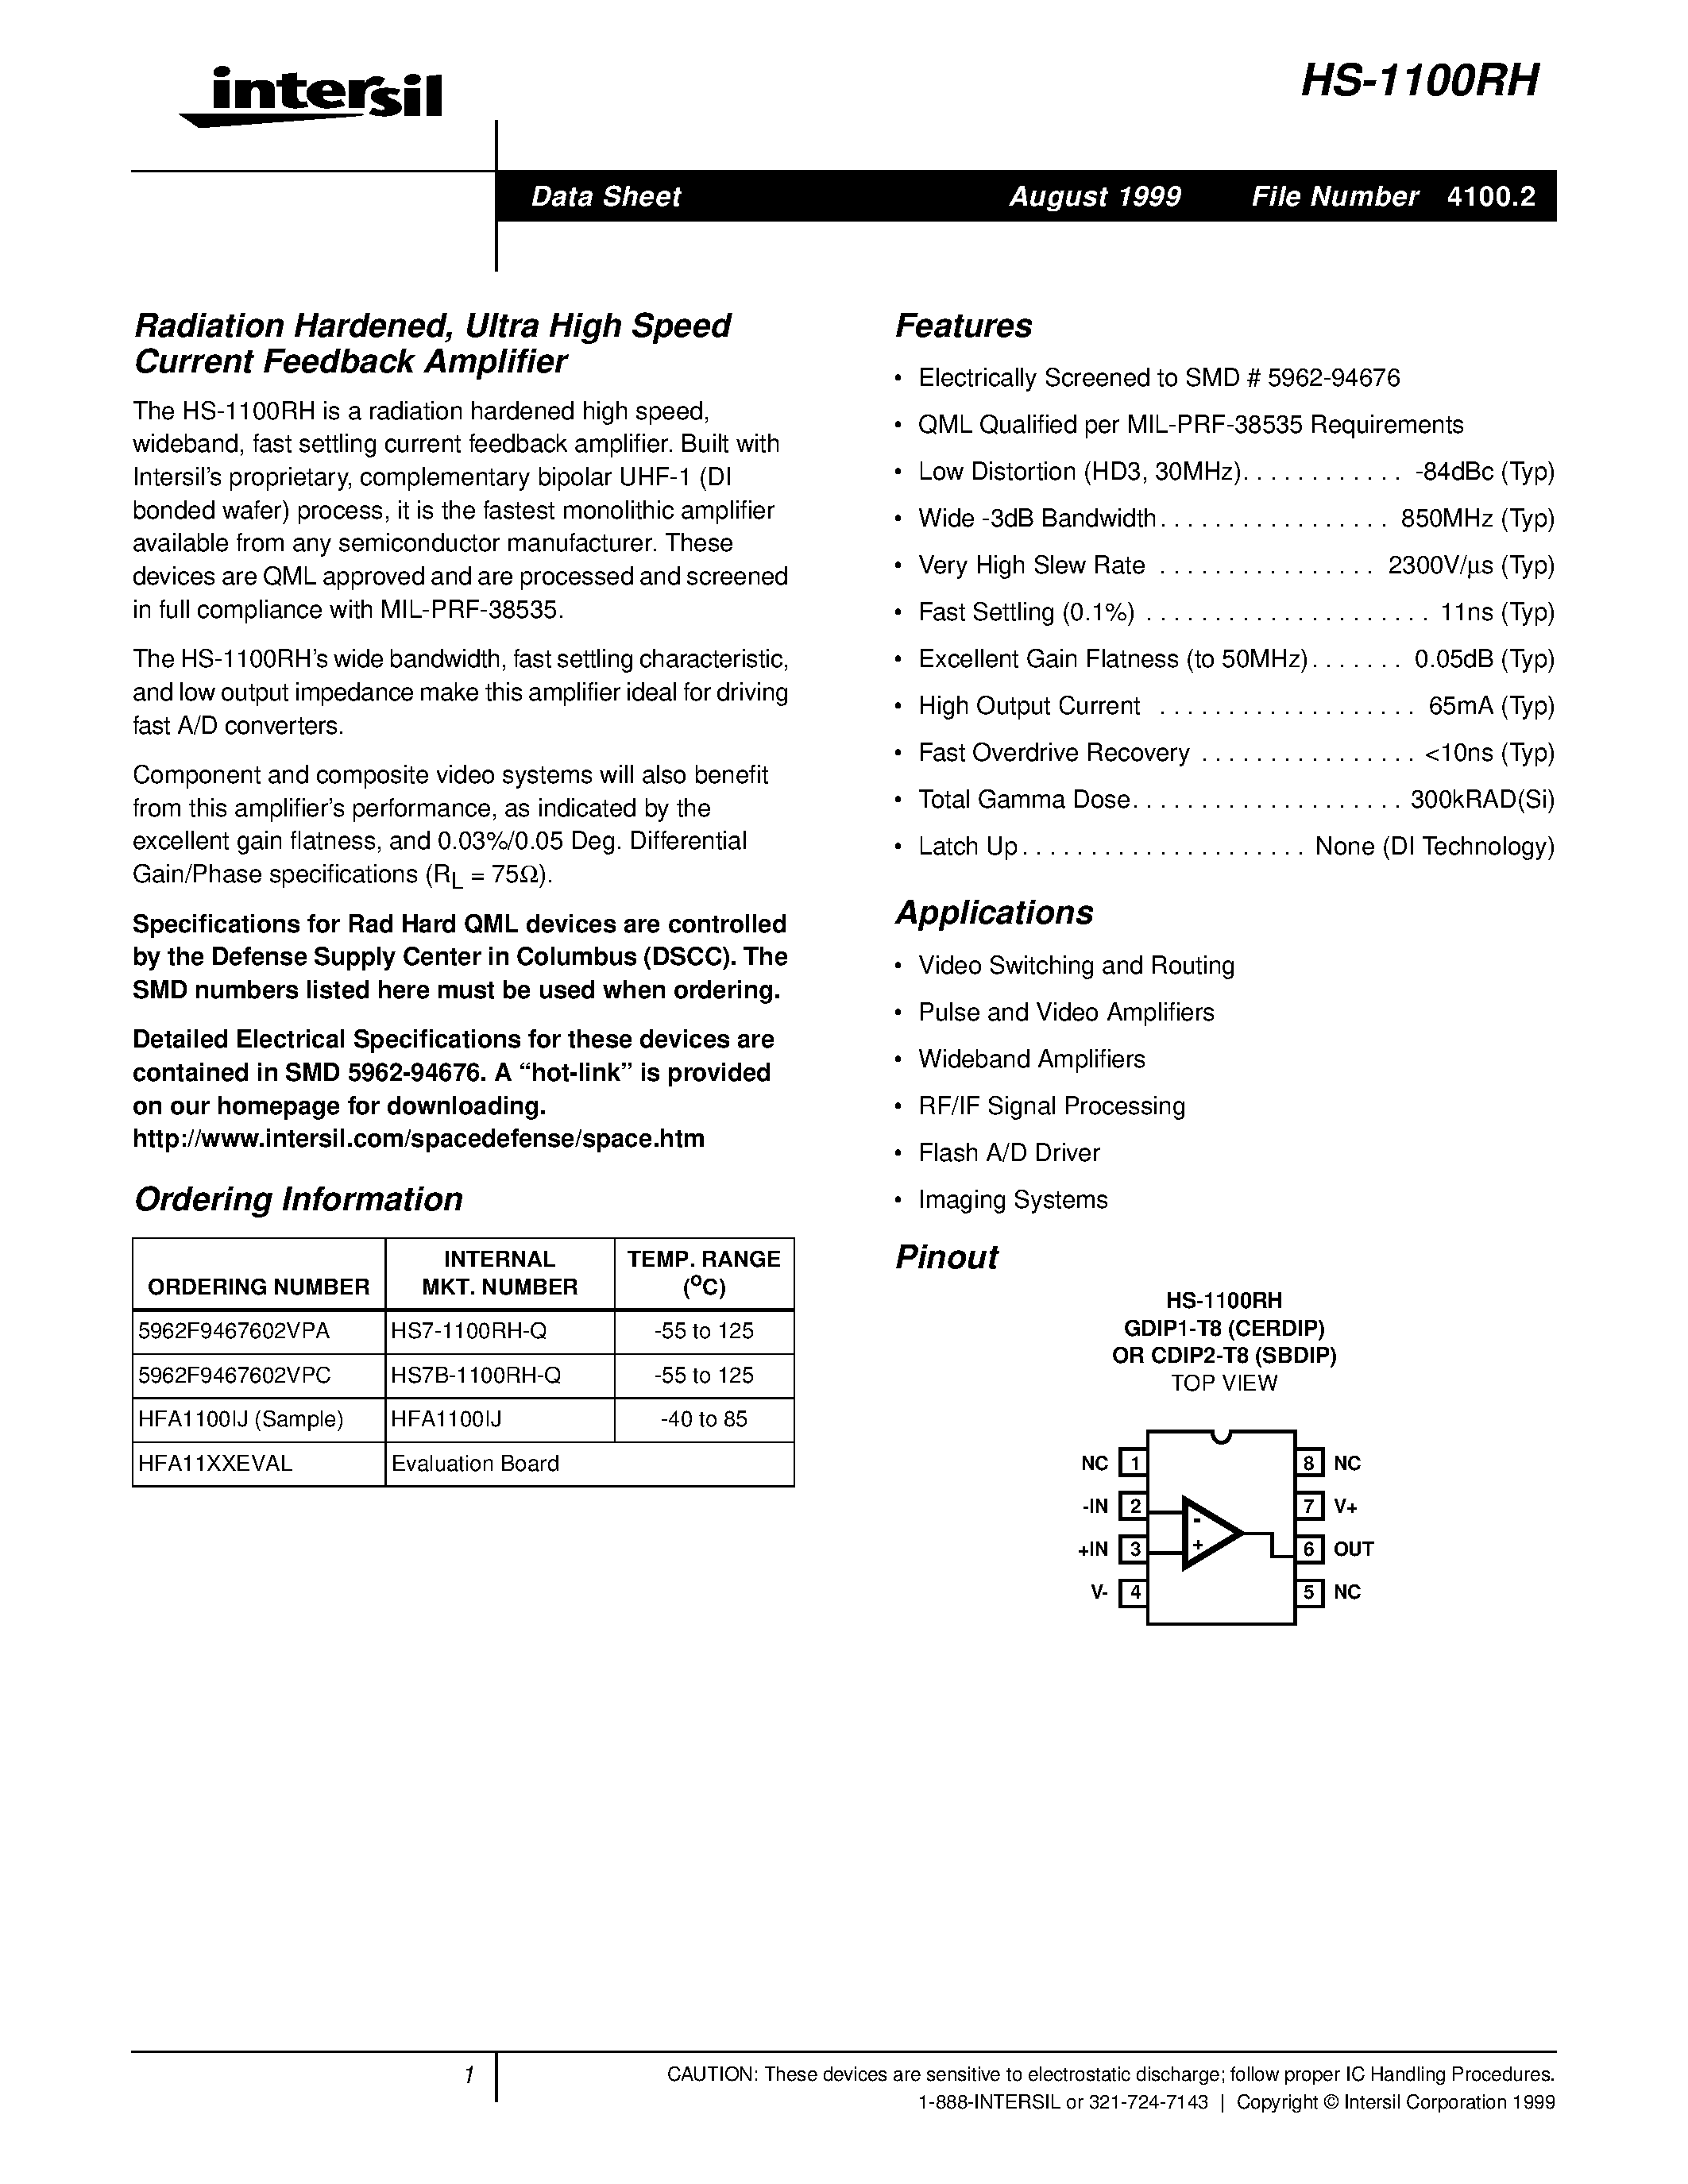 Datasheet HS7B-1100RH-Q - Radiation Hardened/ Ultra High Speed Current Feedback Amplifier page 1